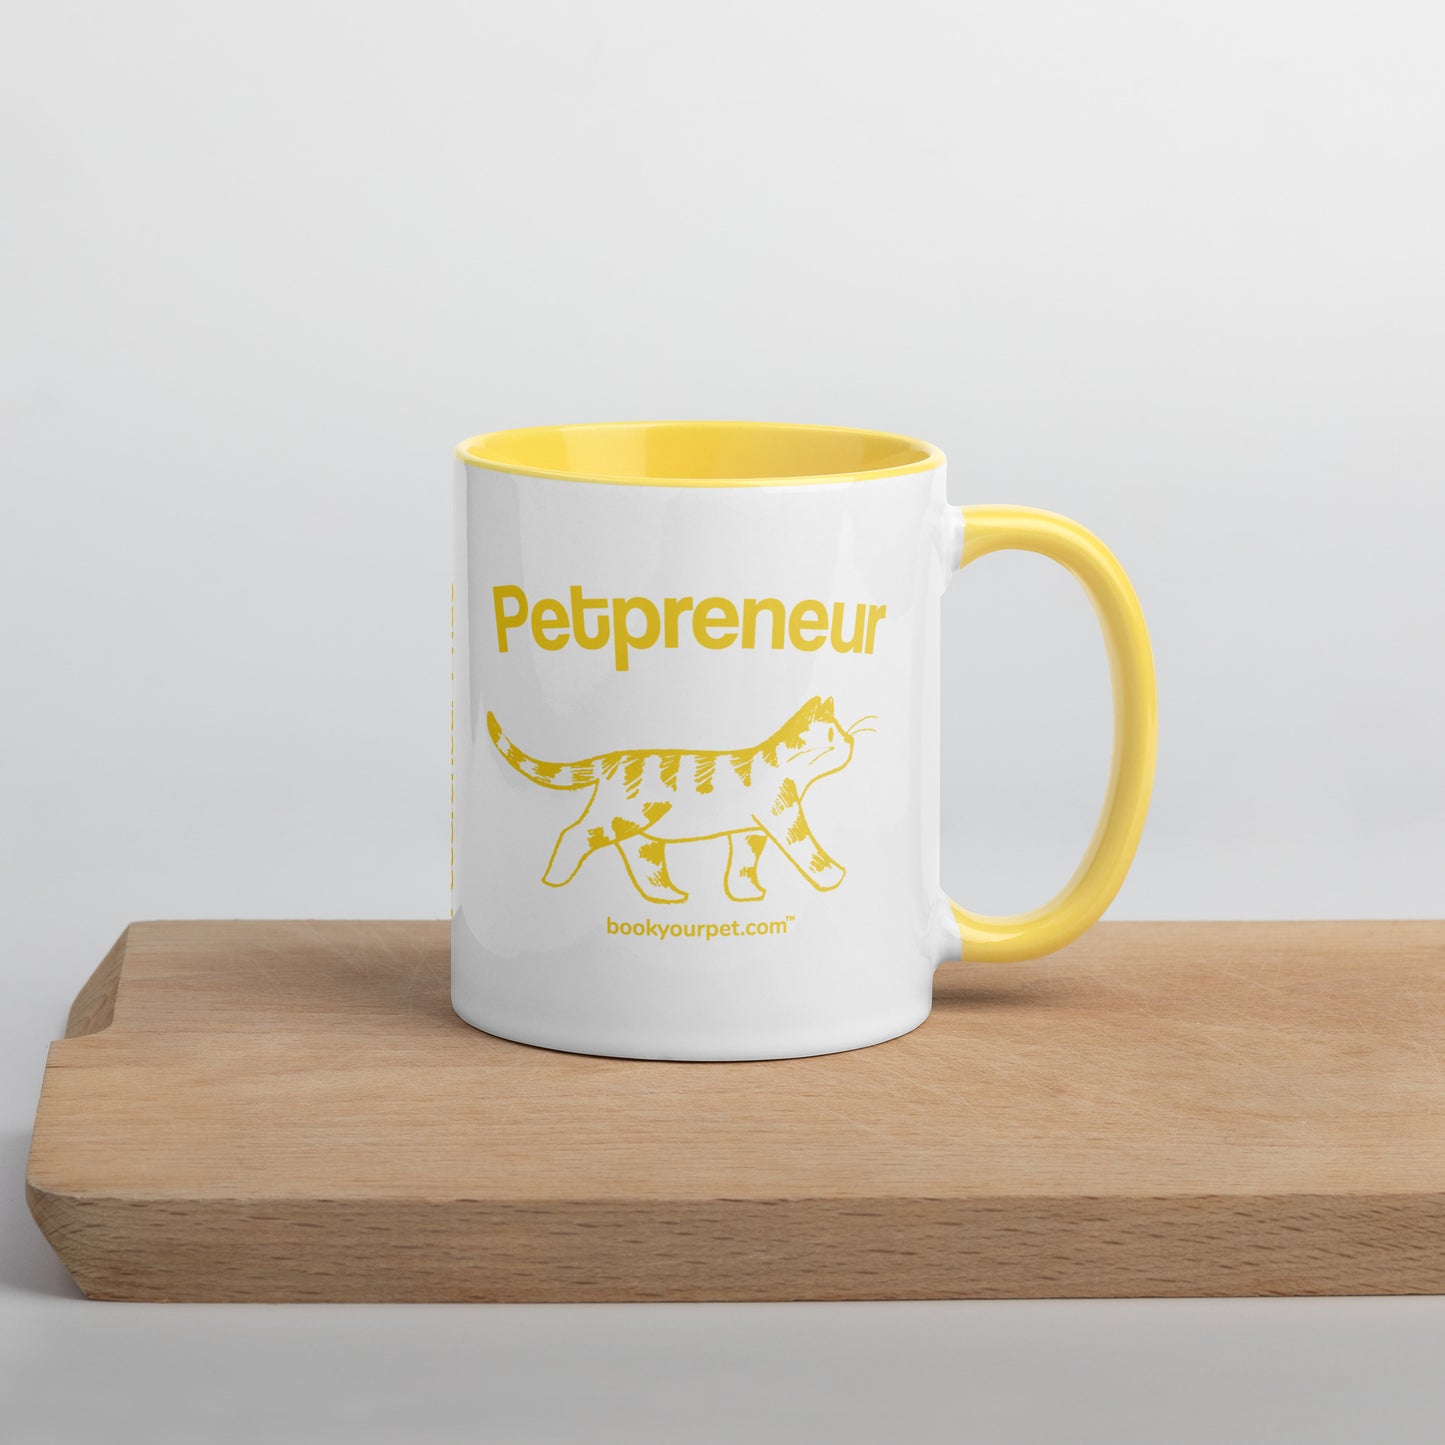 Cat PetPreneur Mug